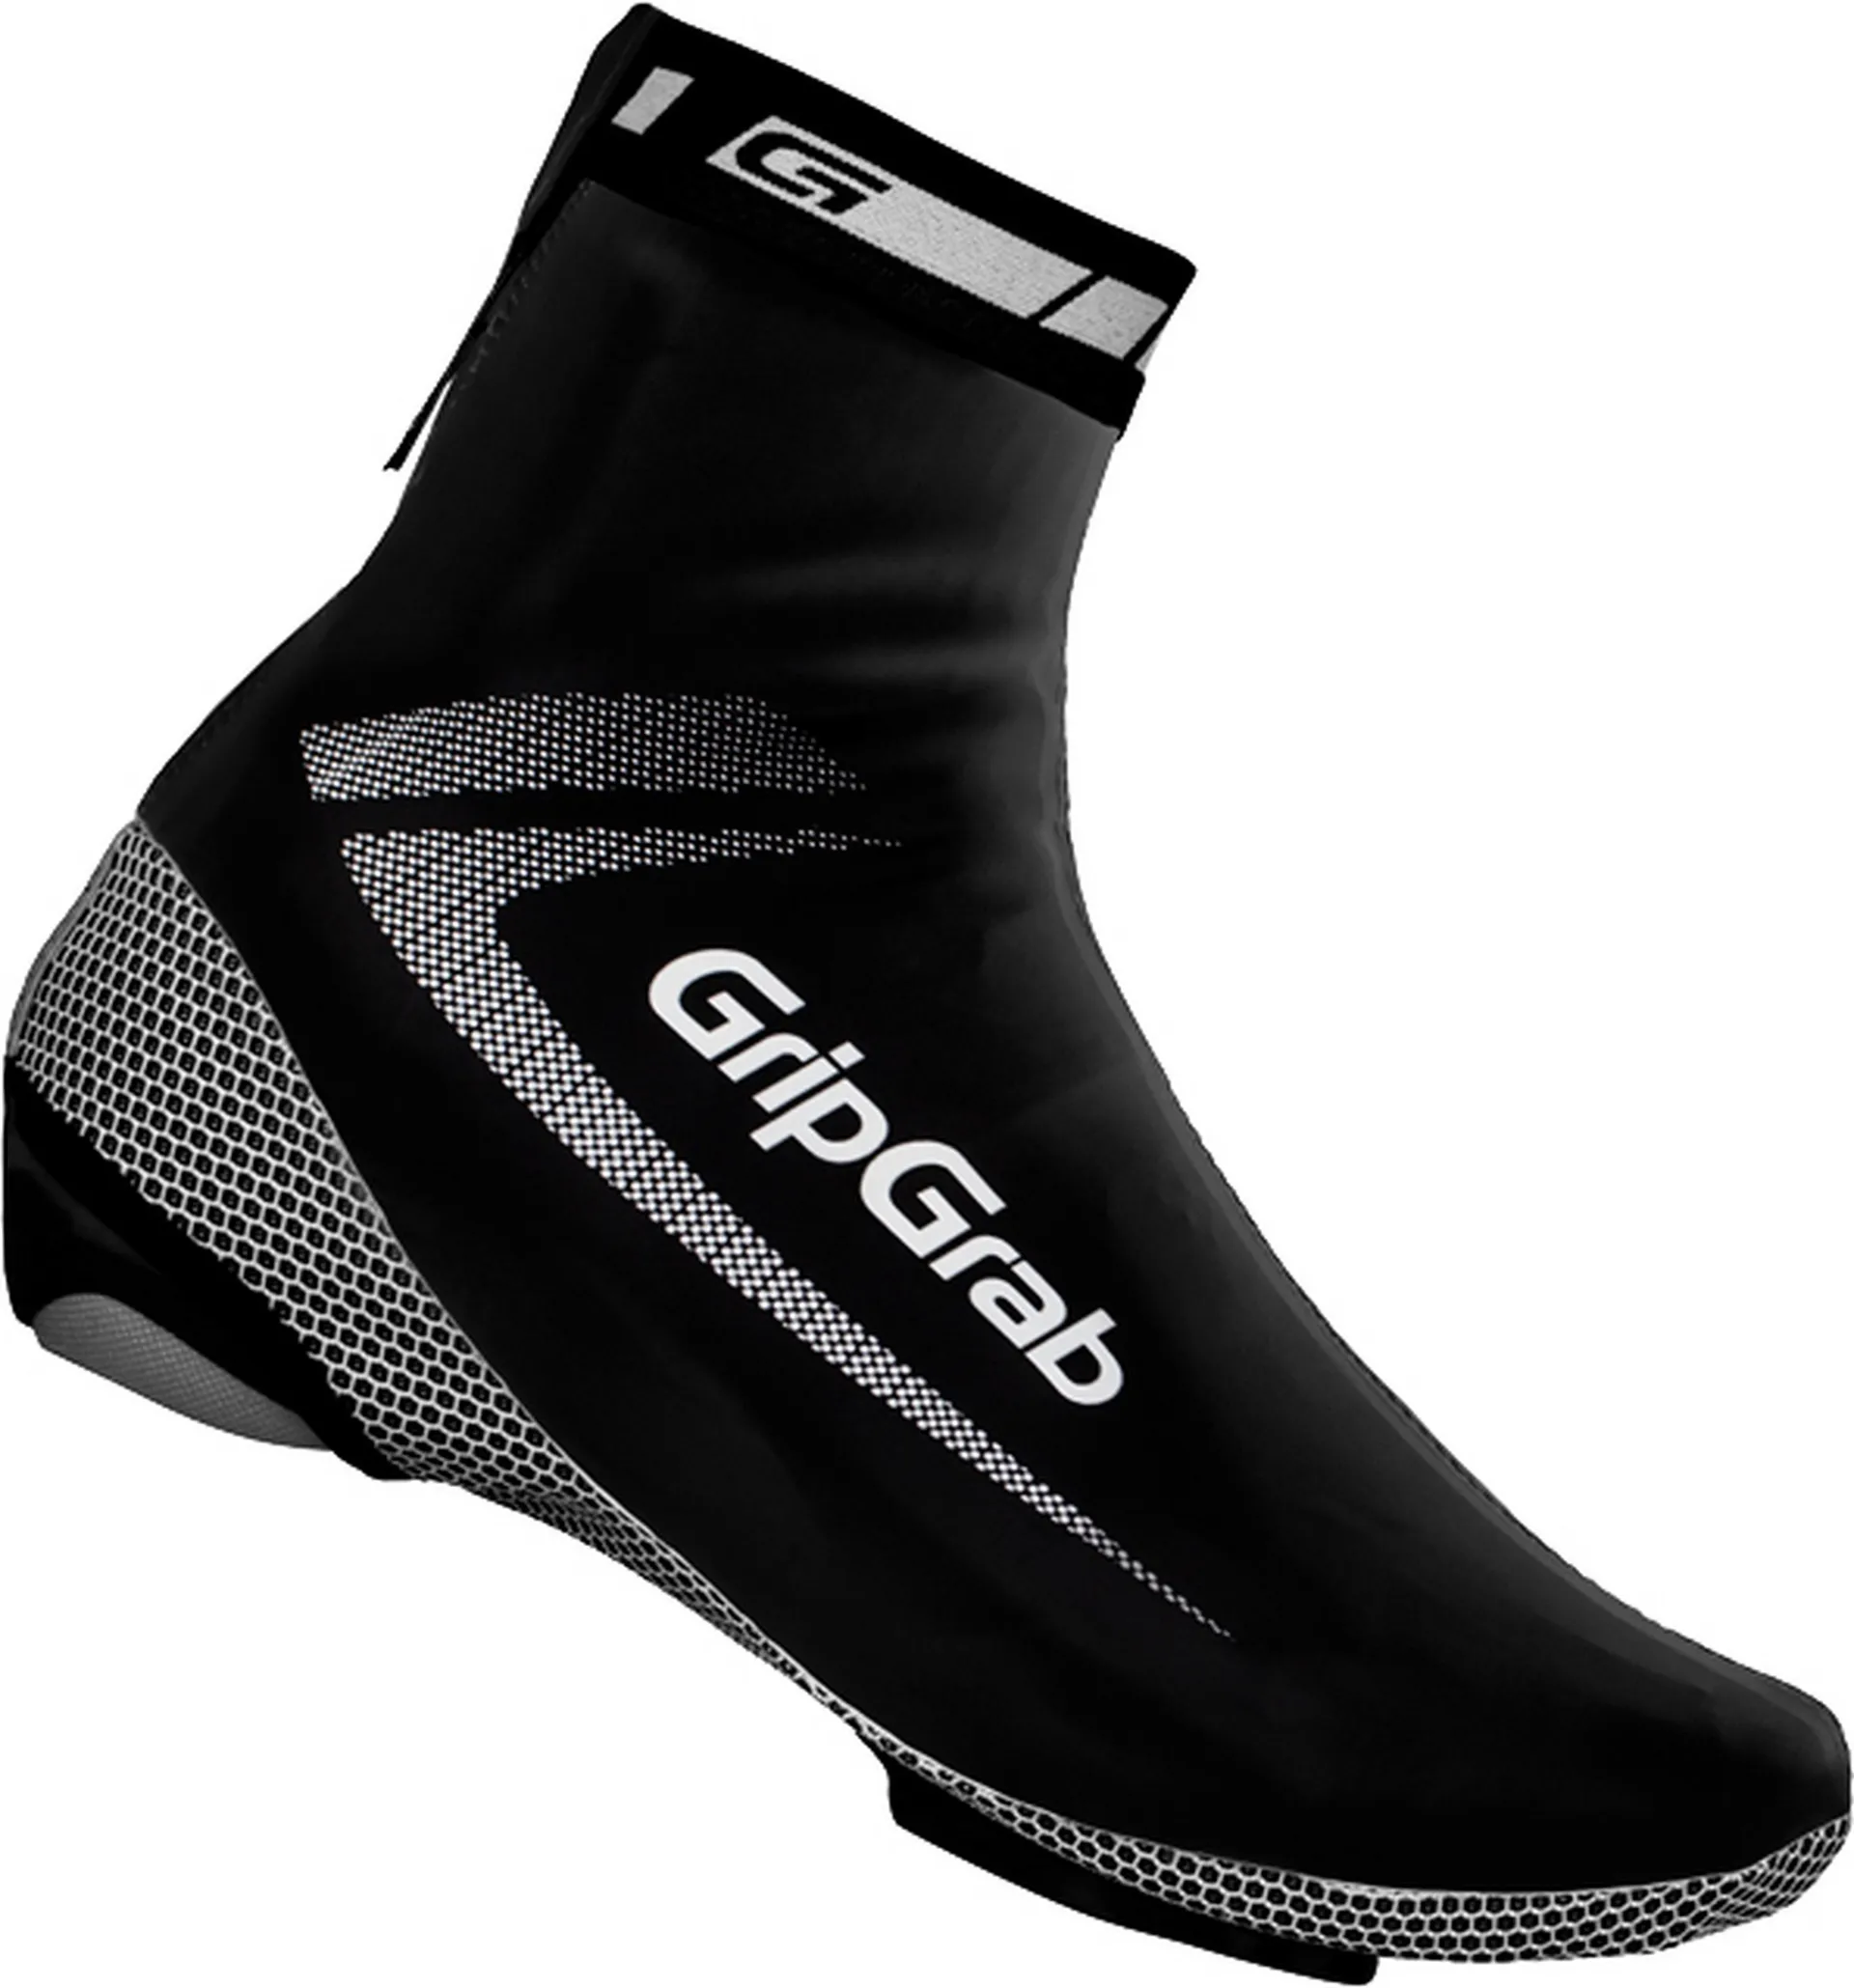 GripGrab RaceAqua Waterproof Shoe Cover